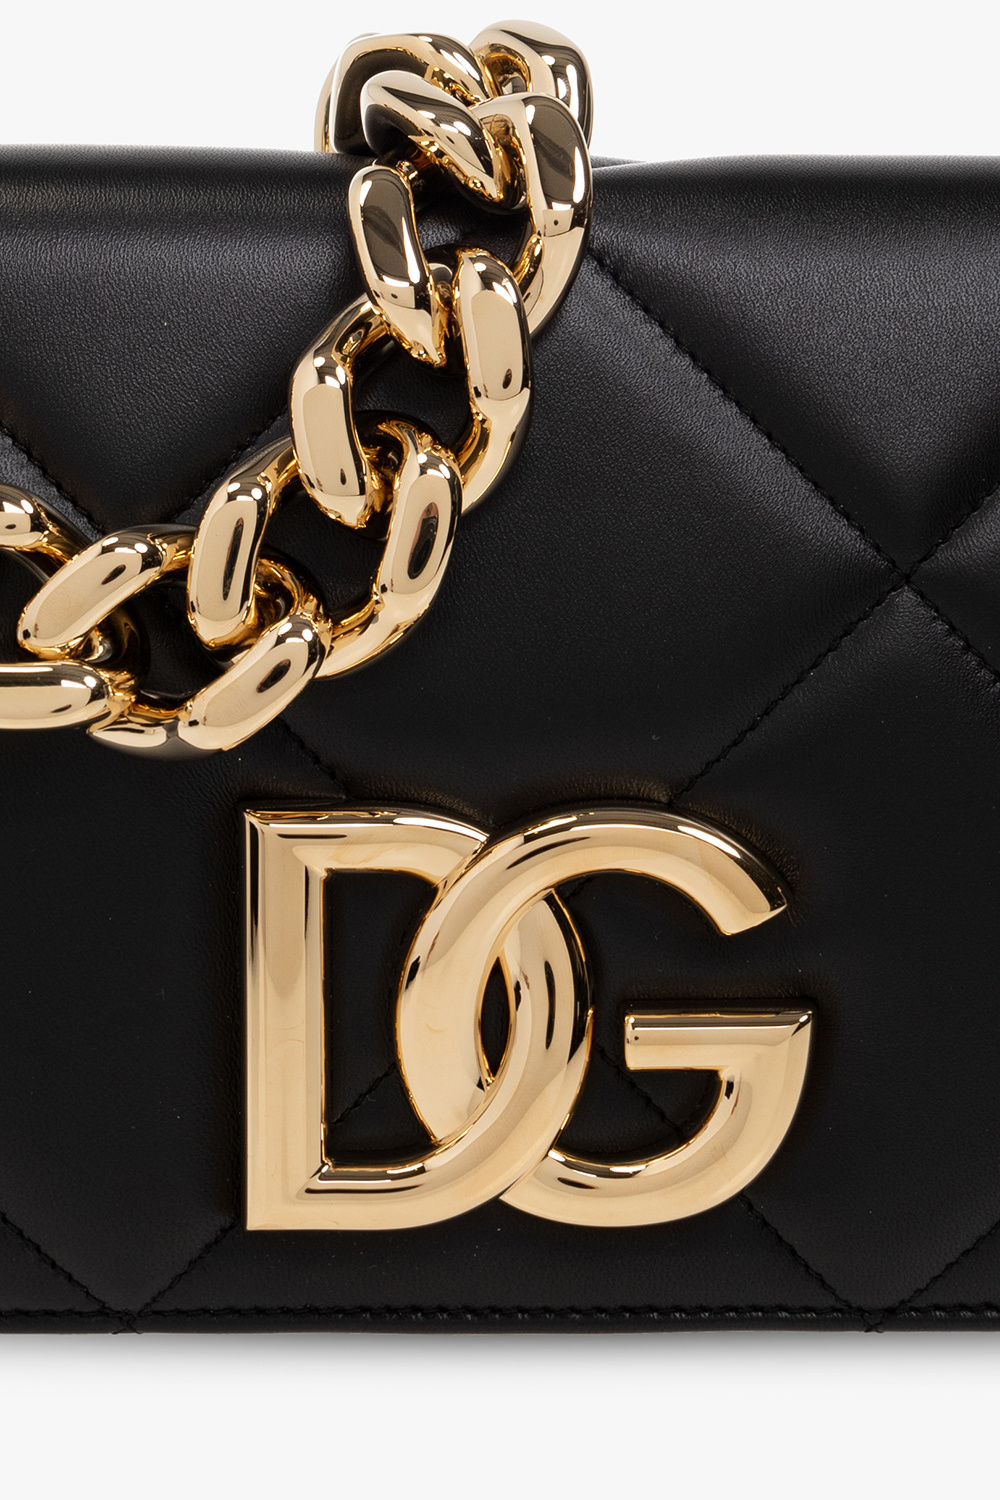 Womens Dolce & Gabbana Bags